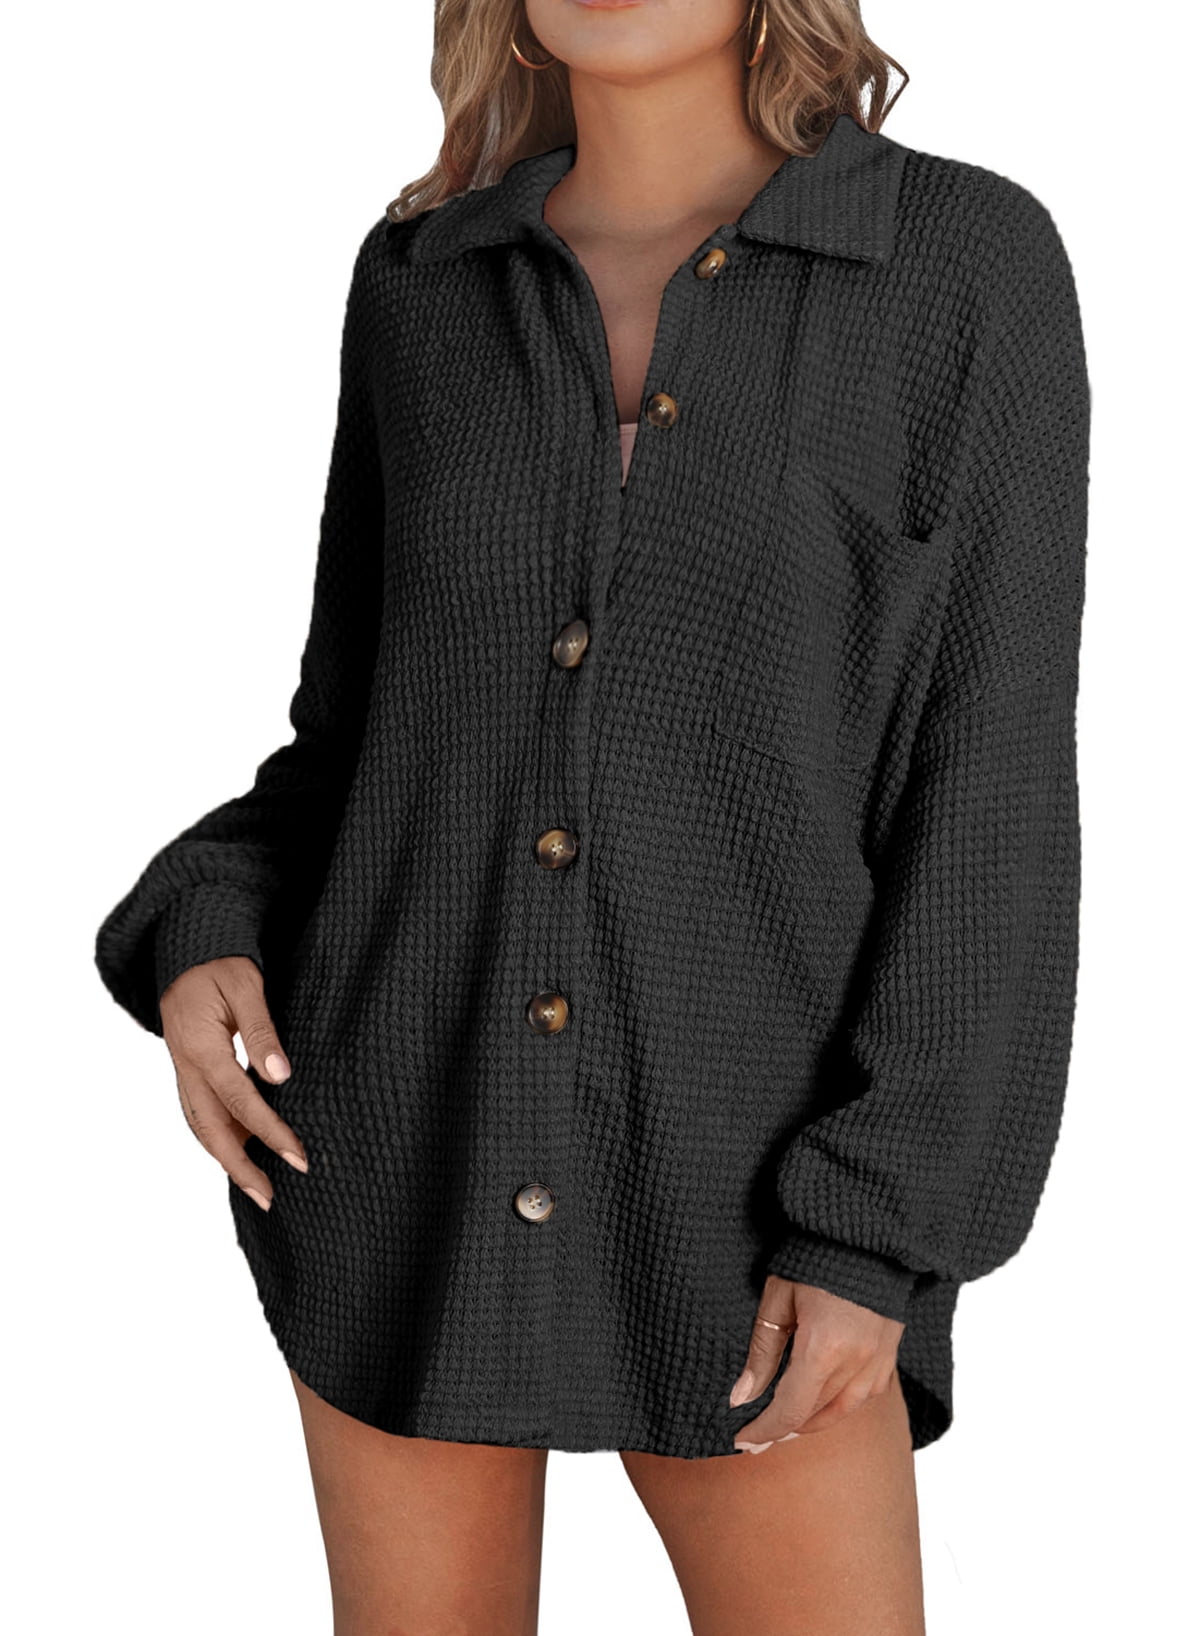 SHEWIN Women's Oversized Shacket Waffle Knit Jacket for Women